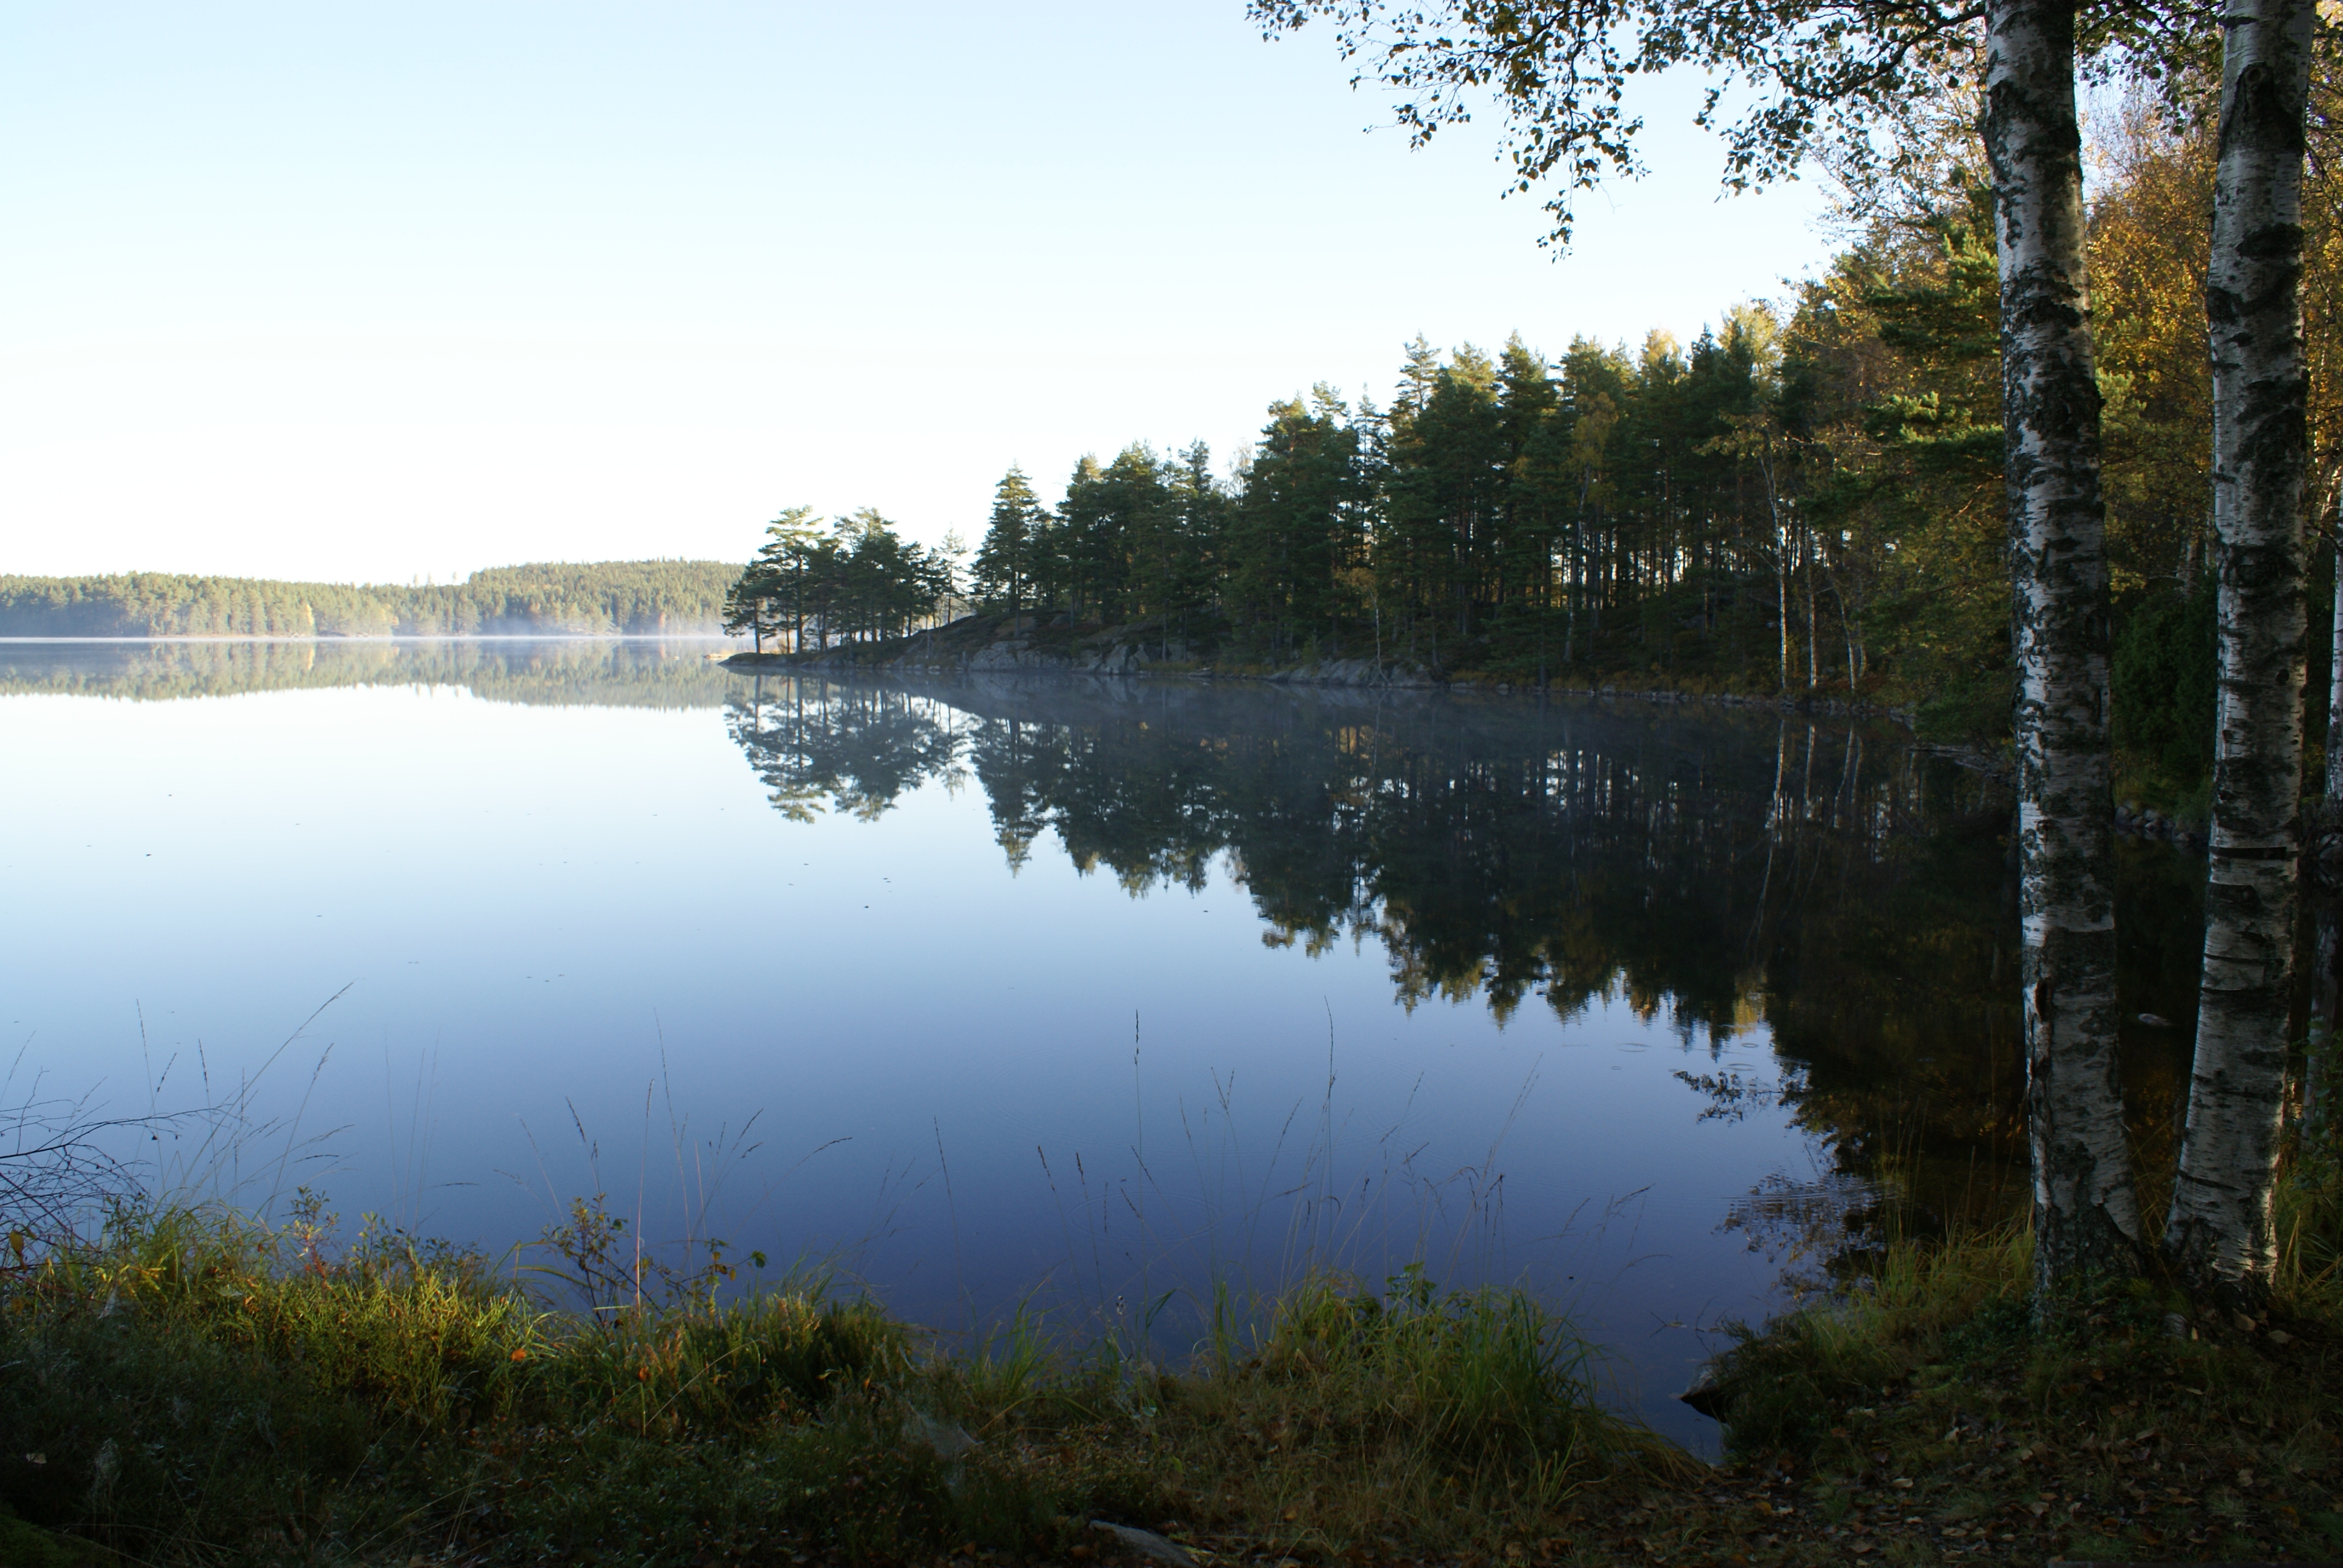 Ösjönäs - Tivedens activity and adventure center